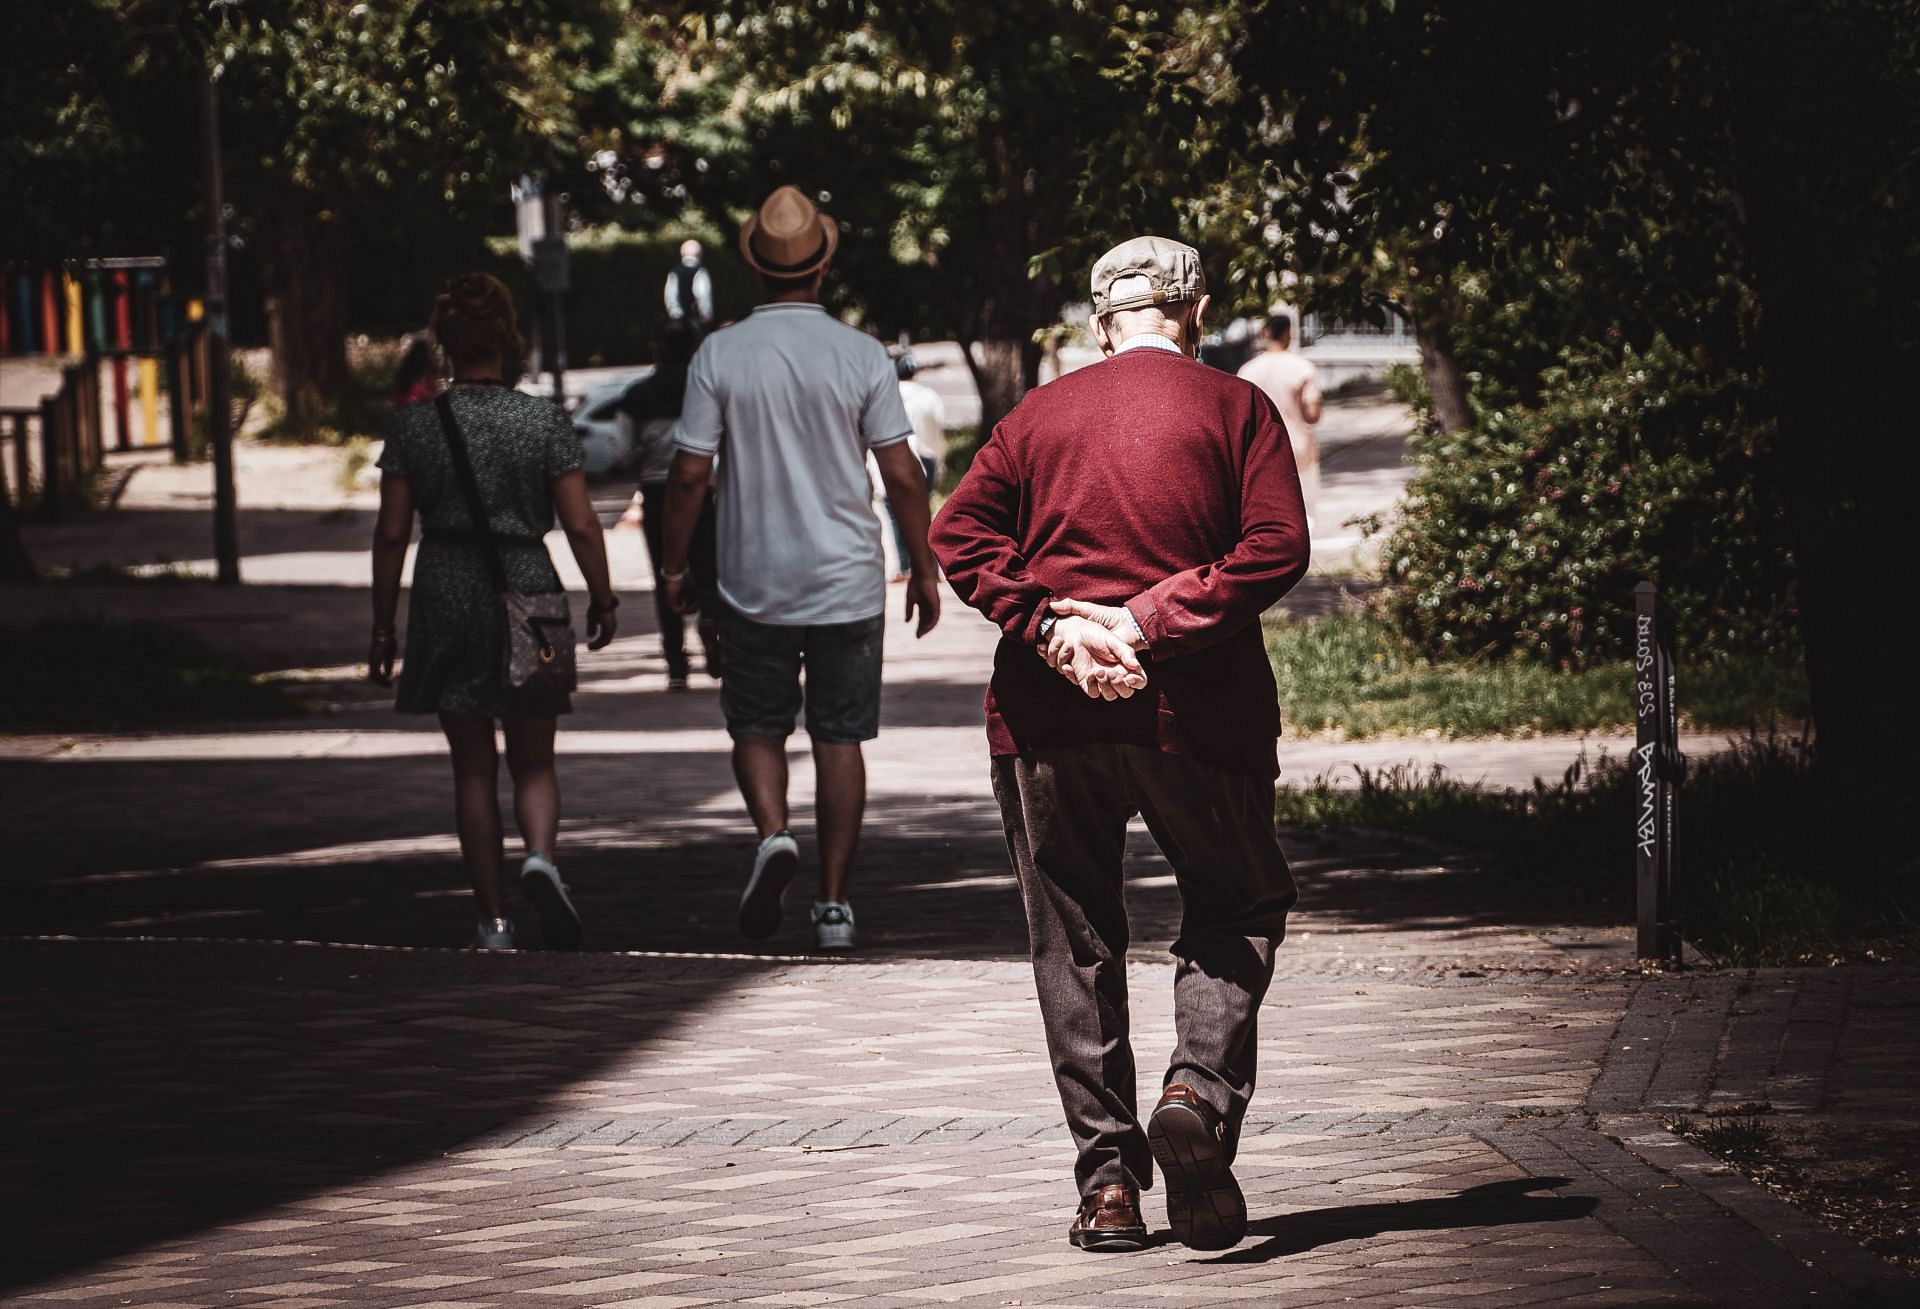 Its crucial to get moving as you age. (Image via Unsplash/ Jose Antonio Gallego Vazquez)